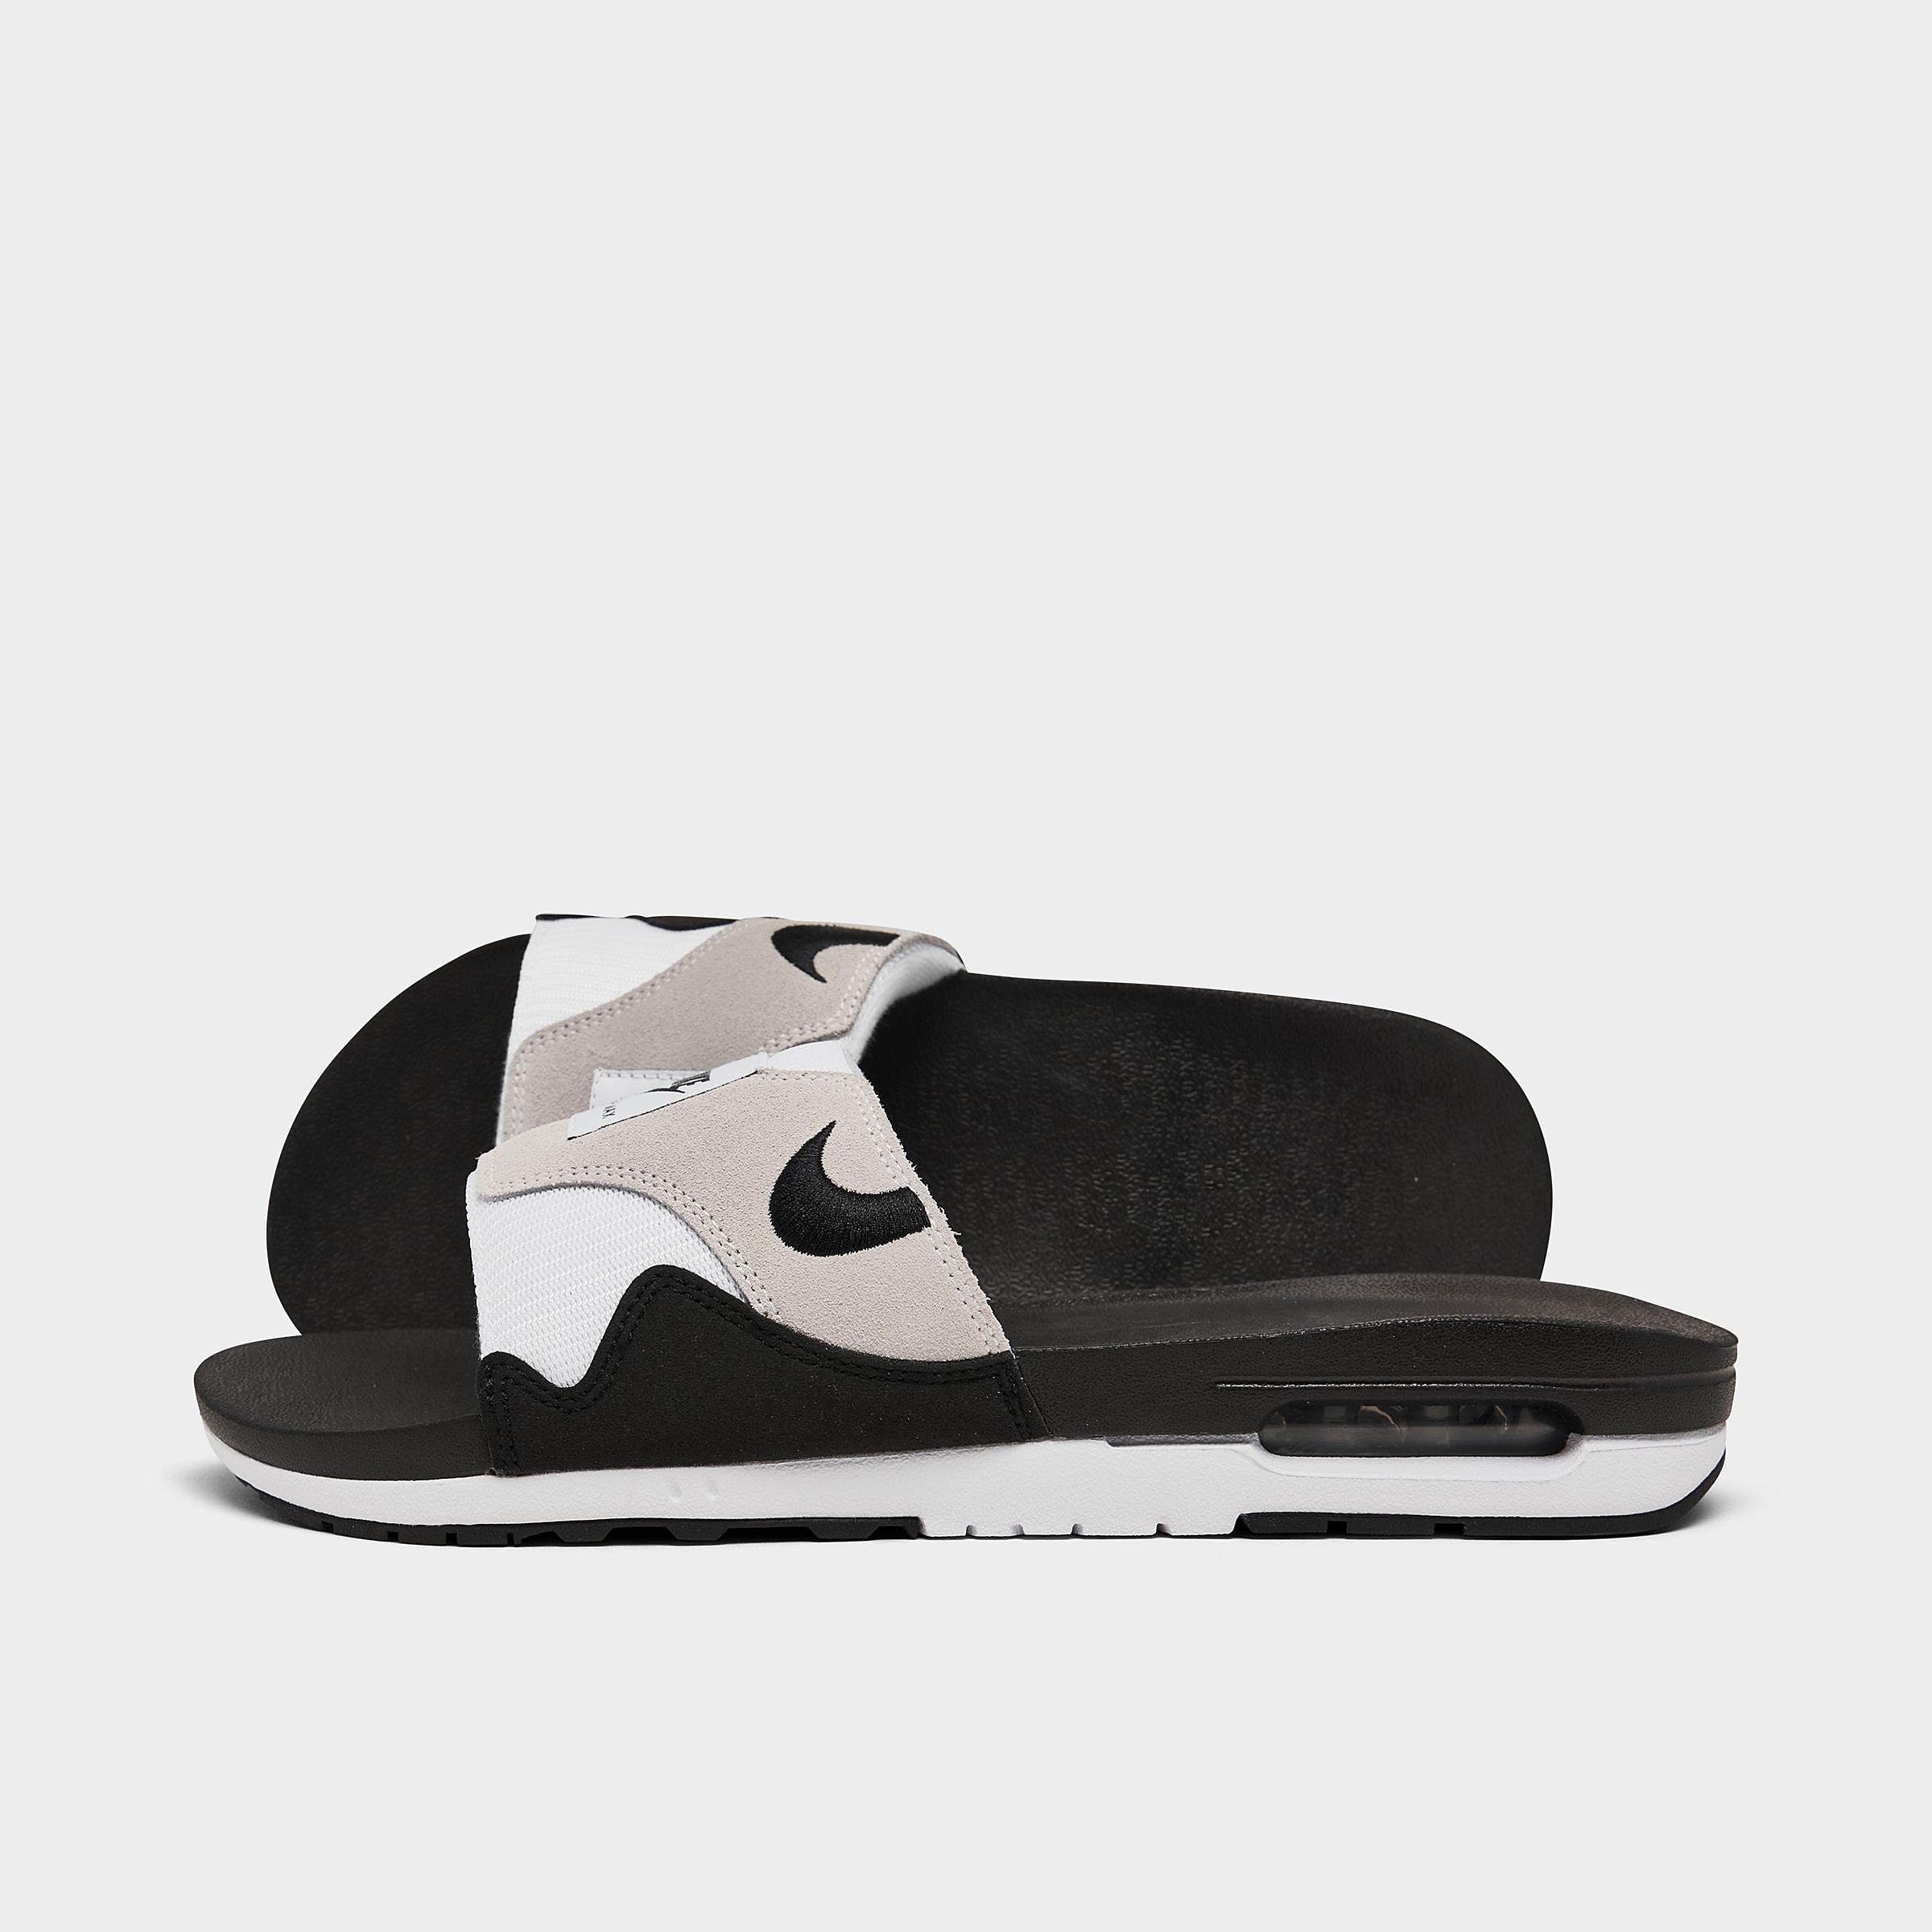 Mens Nike Air Max 1 Slide Sandals